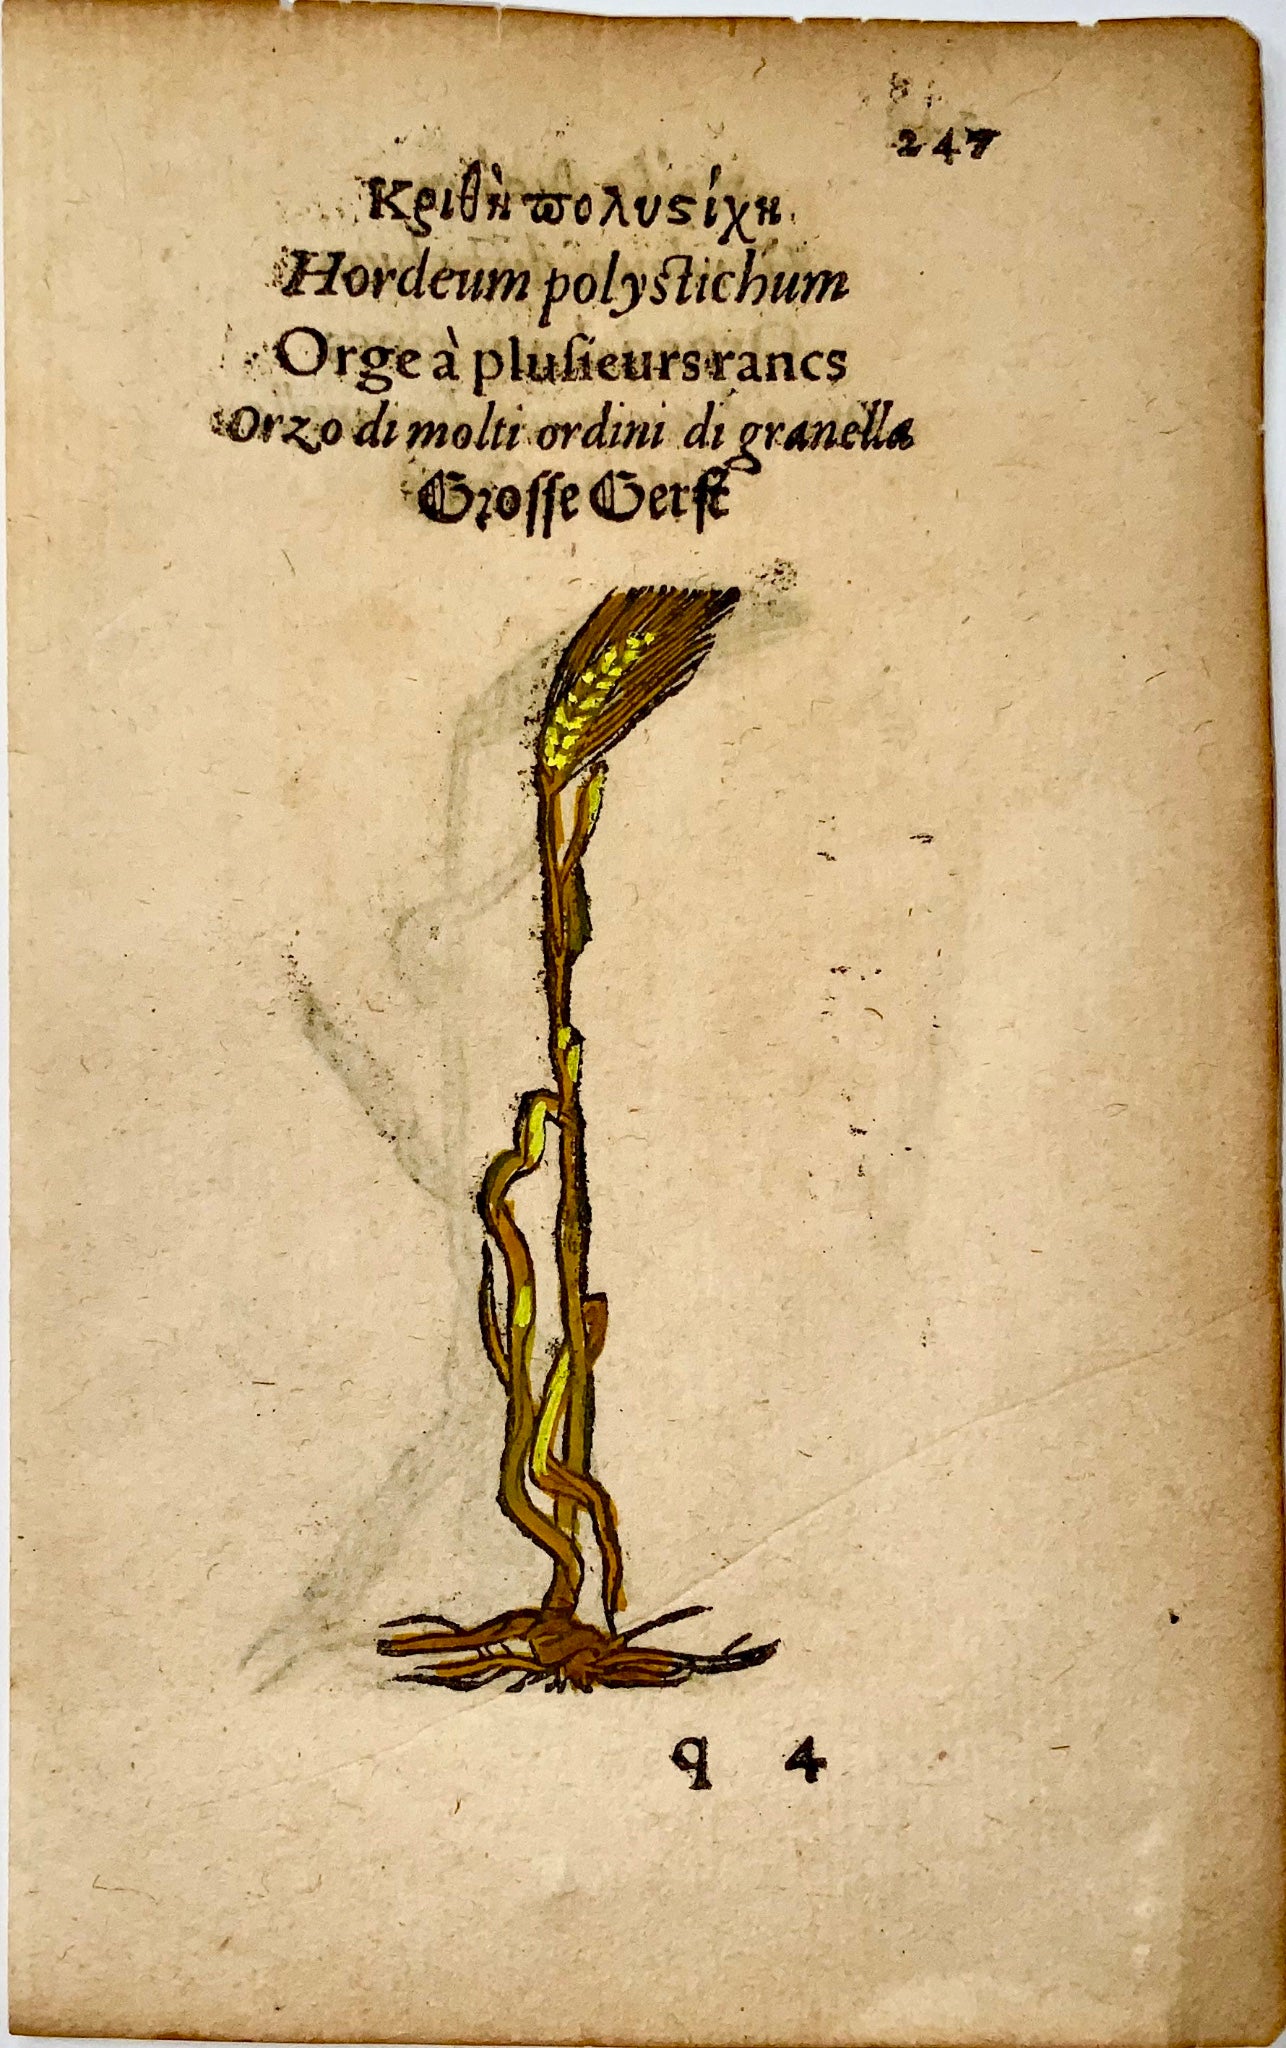 1551 Barley, Leonhard Fuchs, 2 woodcuts, hand colour, grain, botany